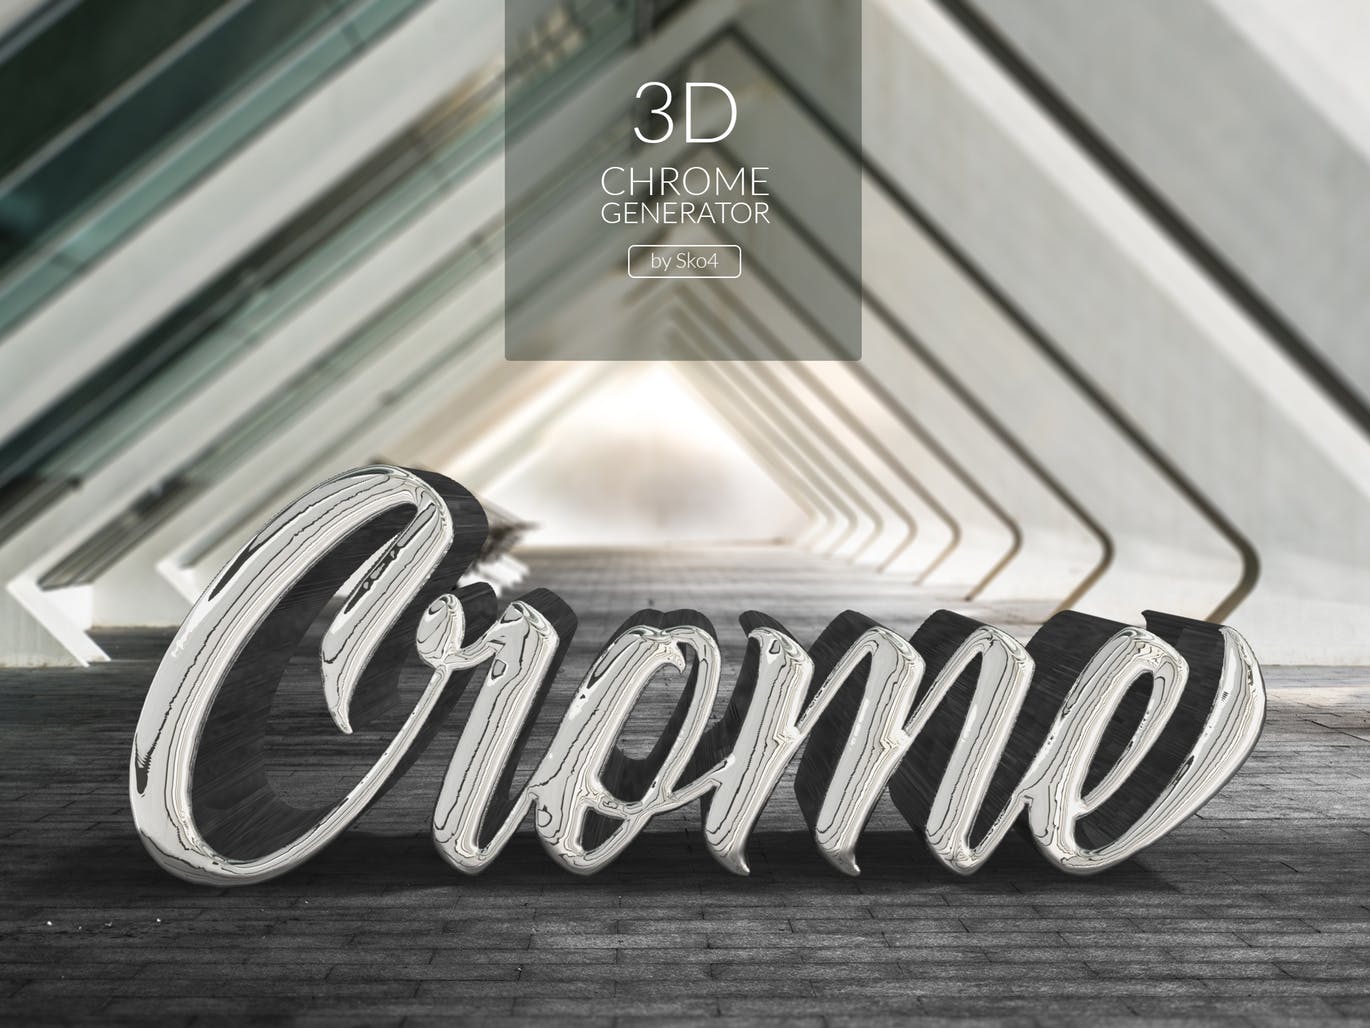 3D金属铬字体特效生成非凡图库精选PS动作 3D Chrome Generator插图(5)